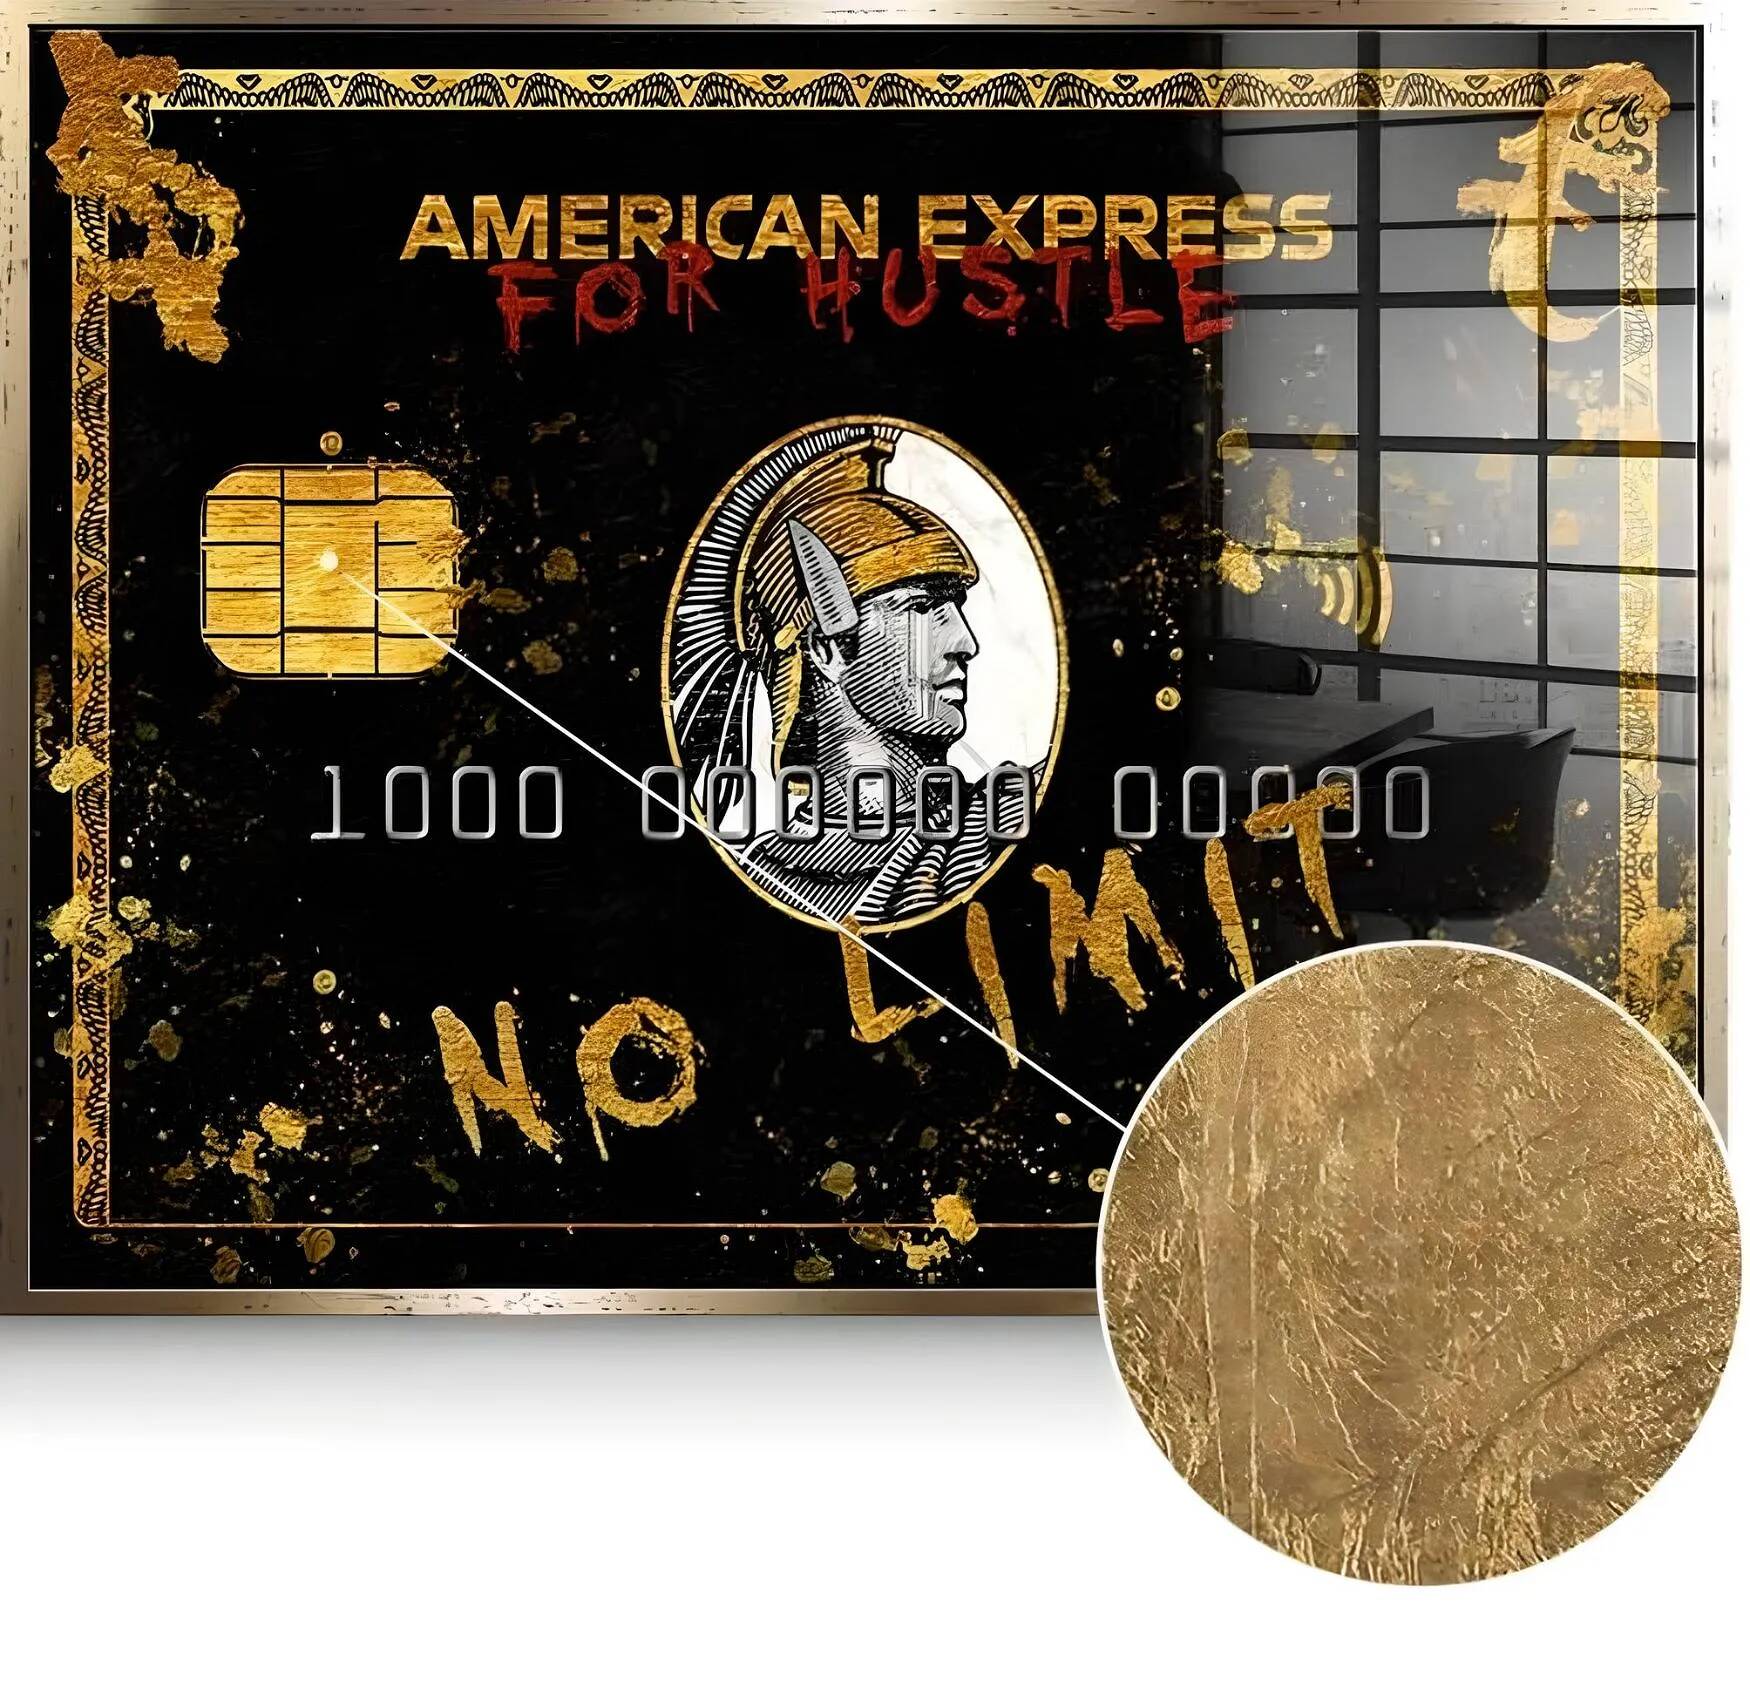 Tableau feuille d'or American Express doré